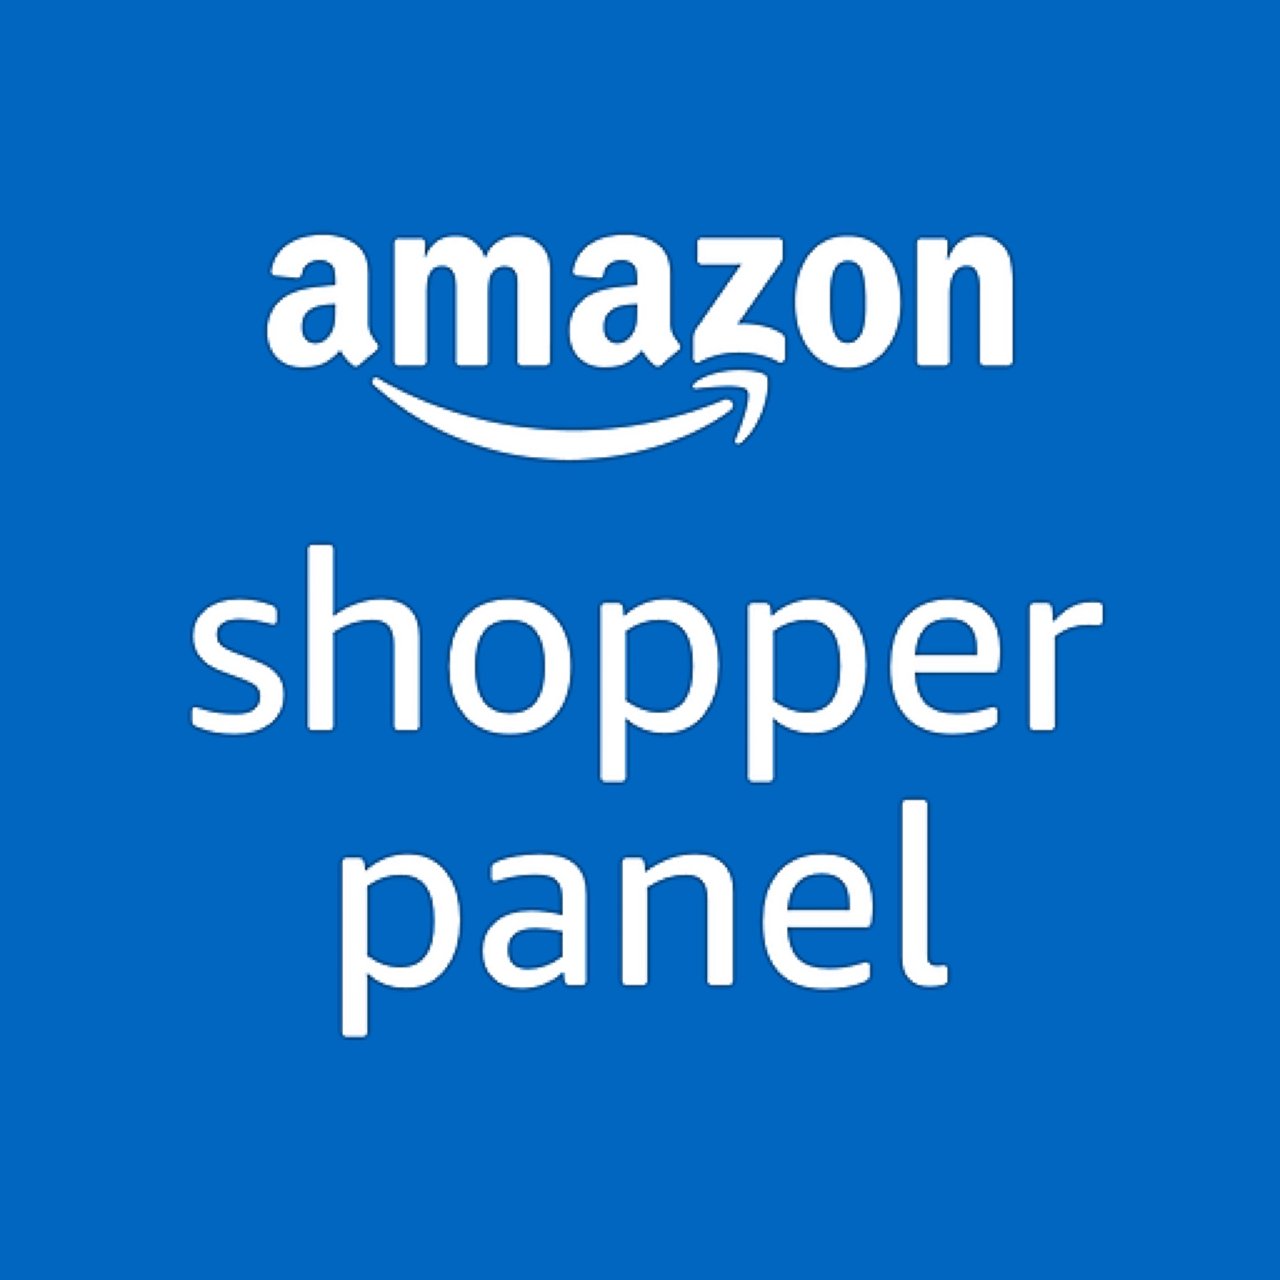 Amazon Shopper Panel...